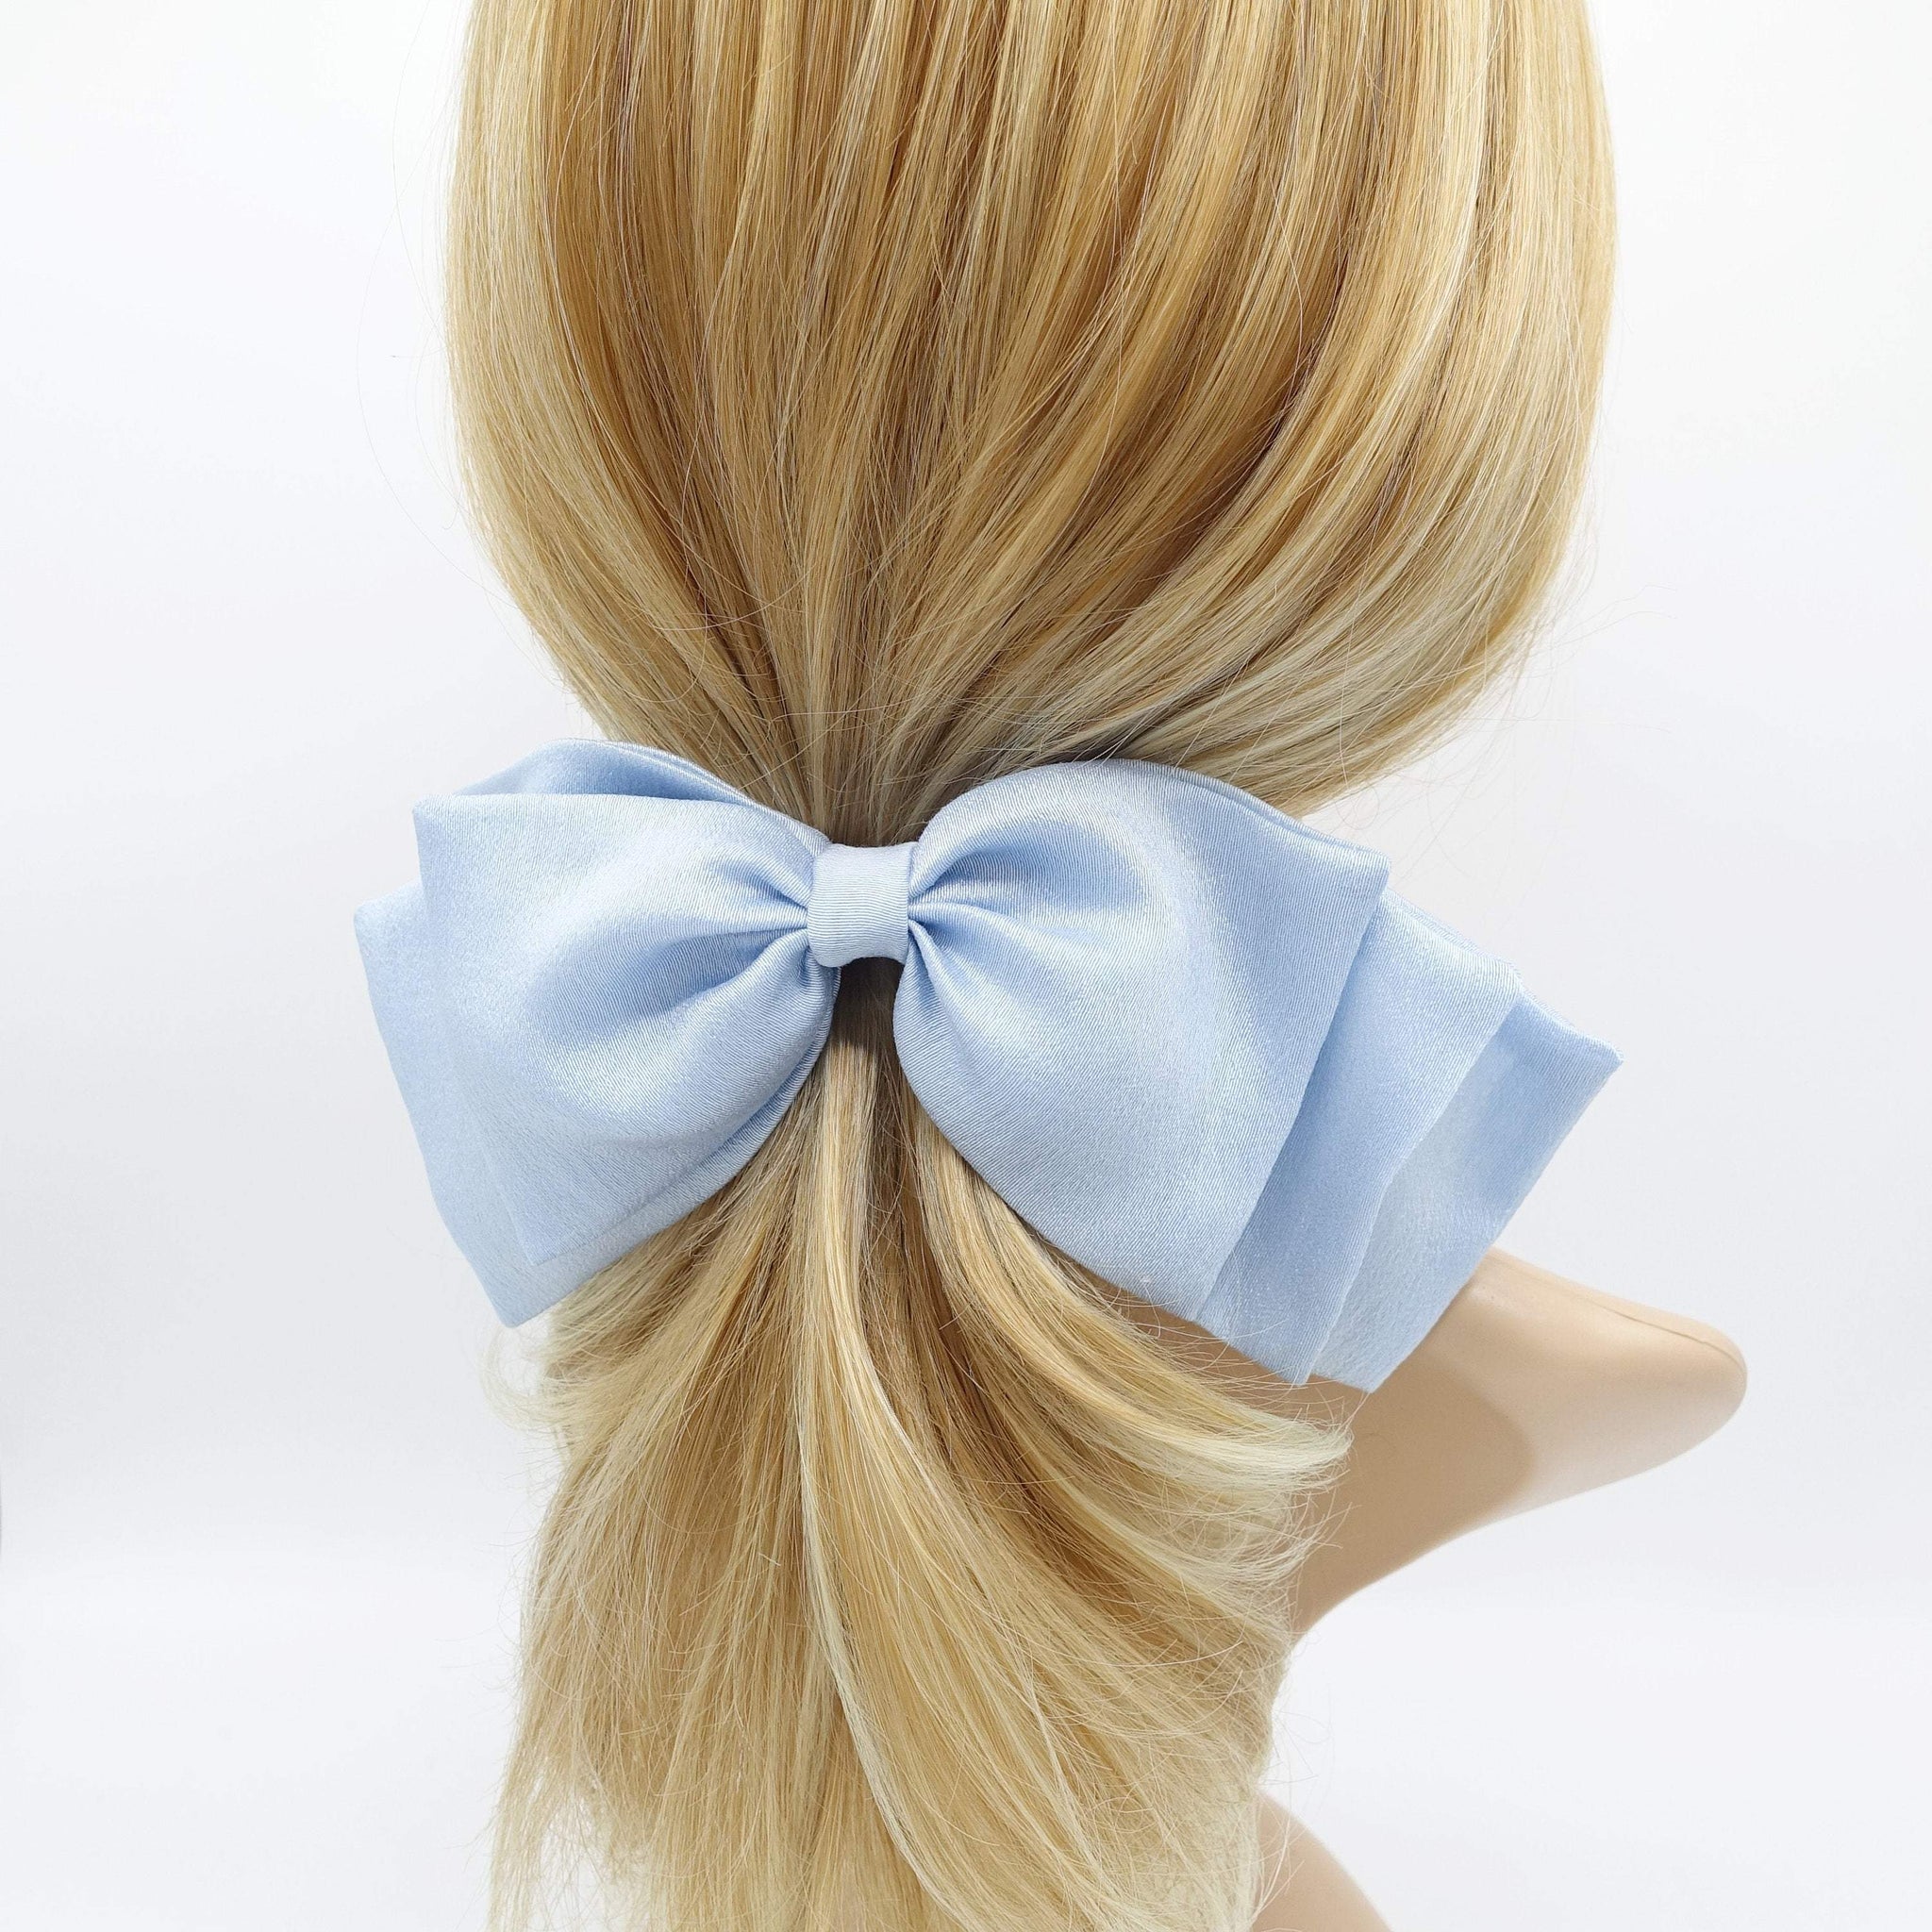 VeryShine claw/banana/barrette Sky blue floppy hair bow stacked hair bow for women